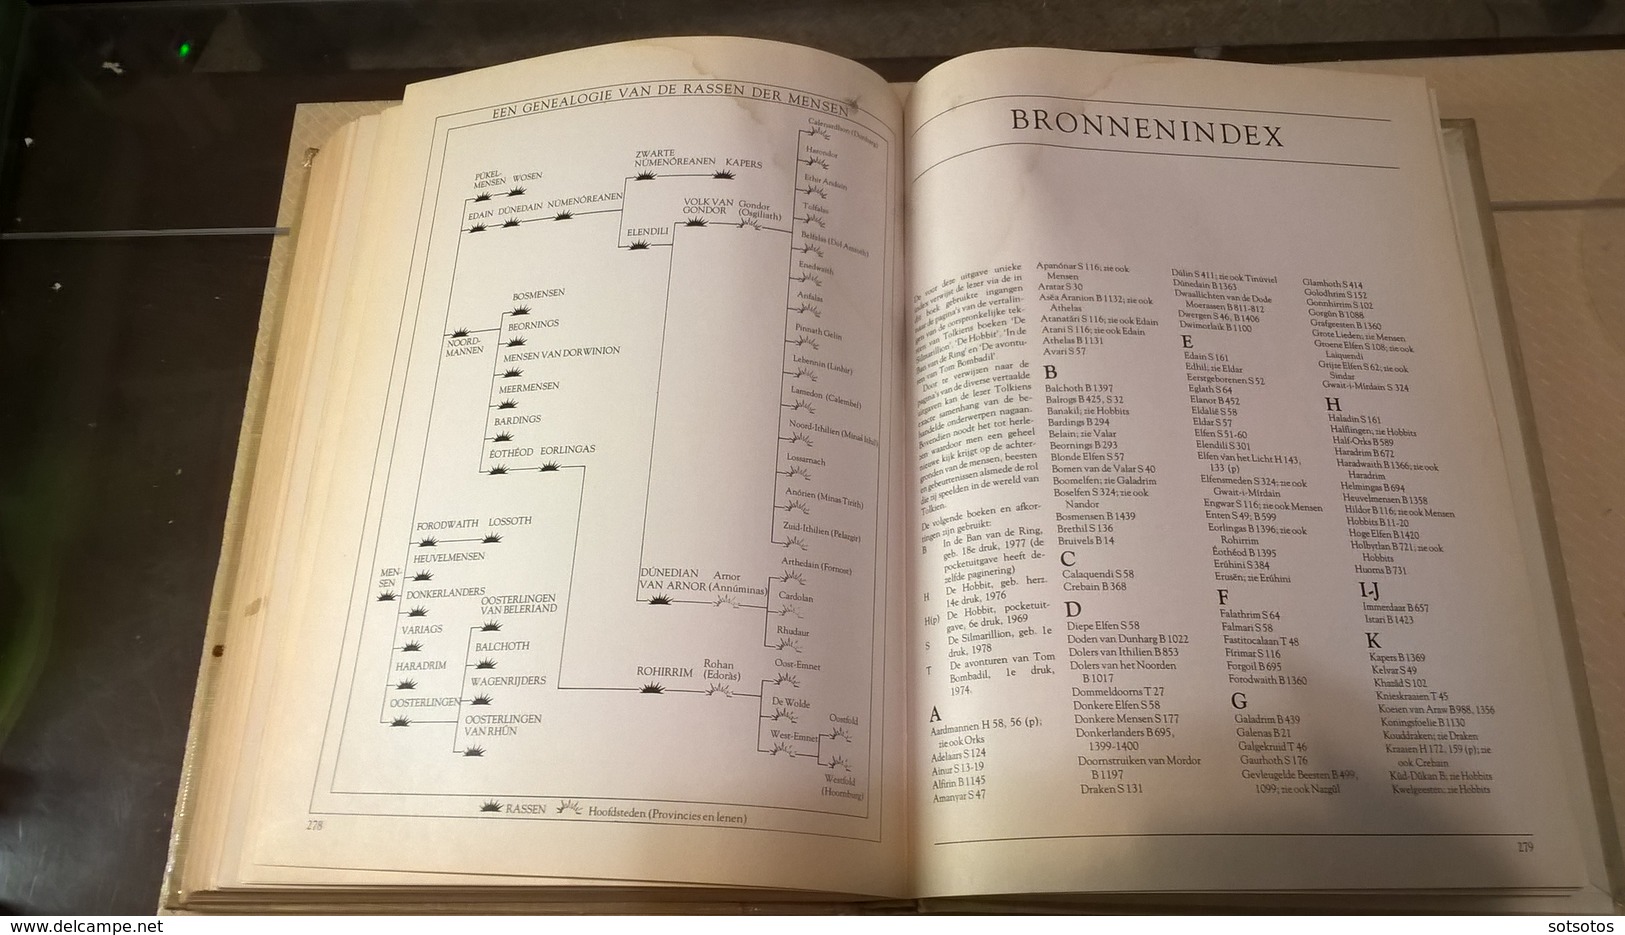 EEN TOLKIEN BESTIARIUM: David DAY – Geillustreerd naslagwerk – 288 pgs (22x28 cent) - Illustrated reference work